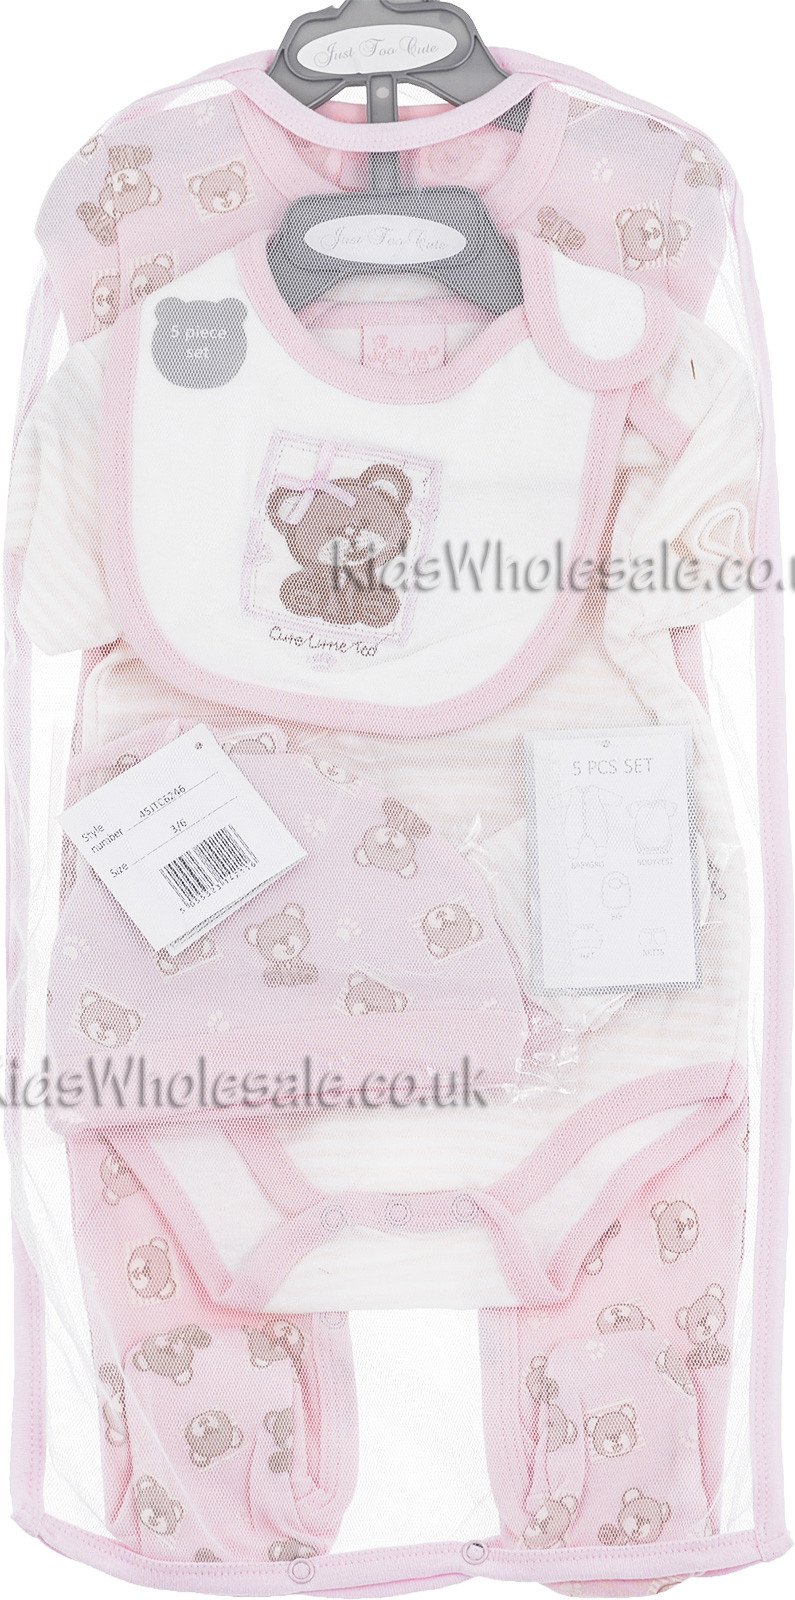 Baby Girls Teddy 5 Pce Net Bag Gift Set (NB-6 Months)(45JTC6246)Unit Price:£5.40 - Kidswholesale.co.uk